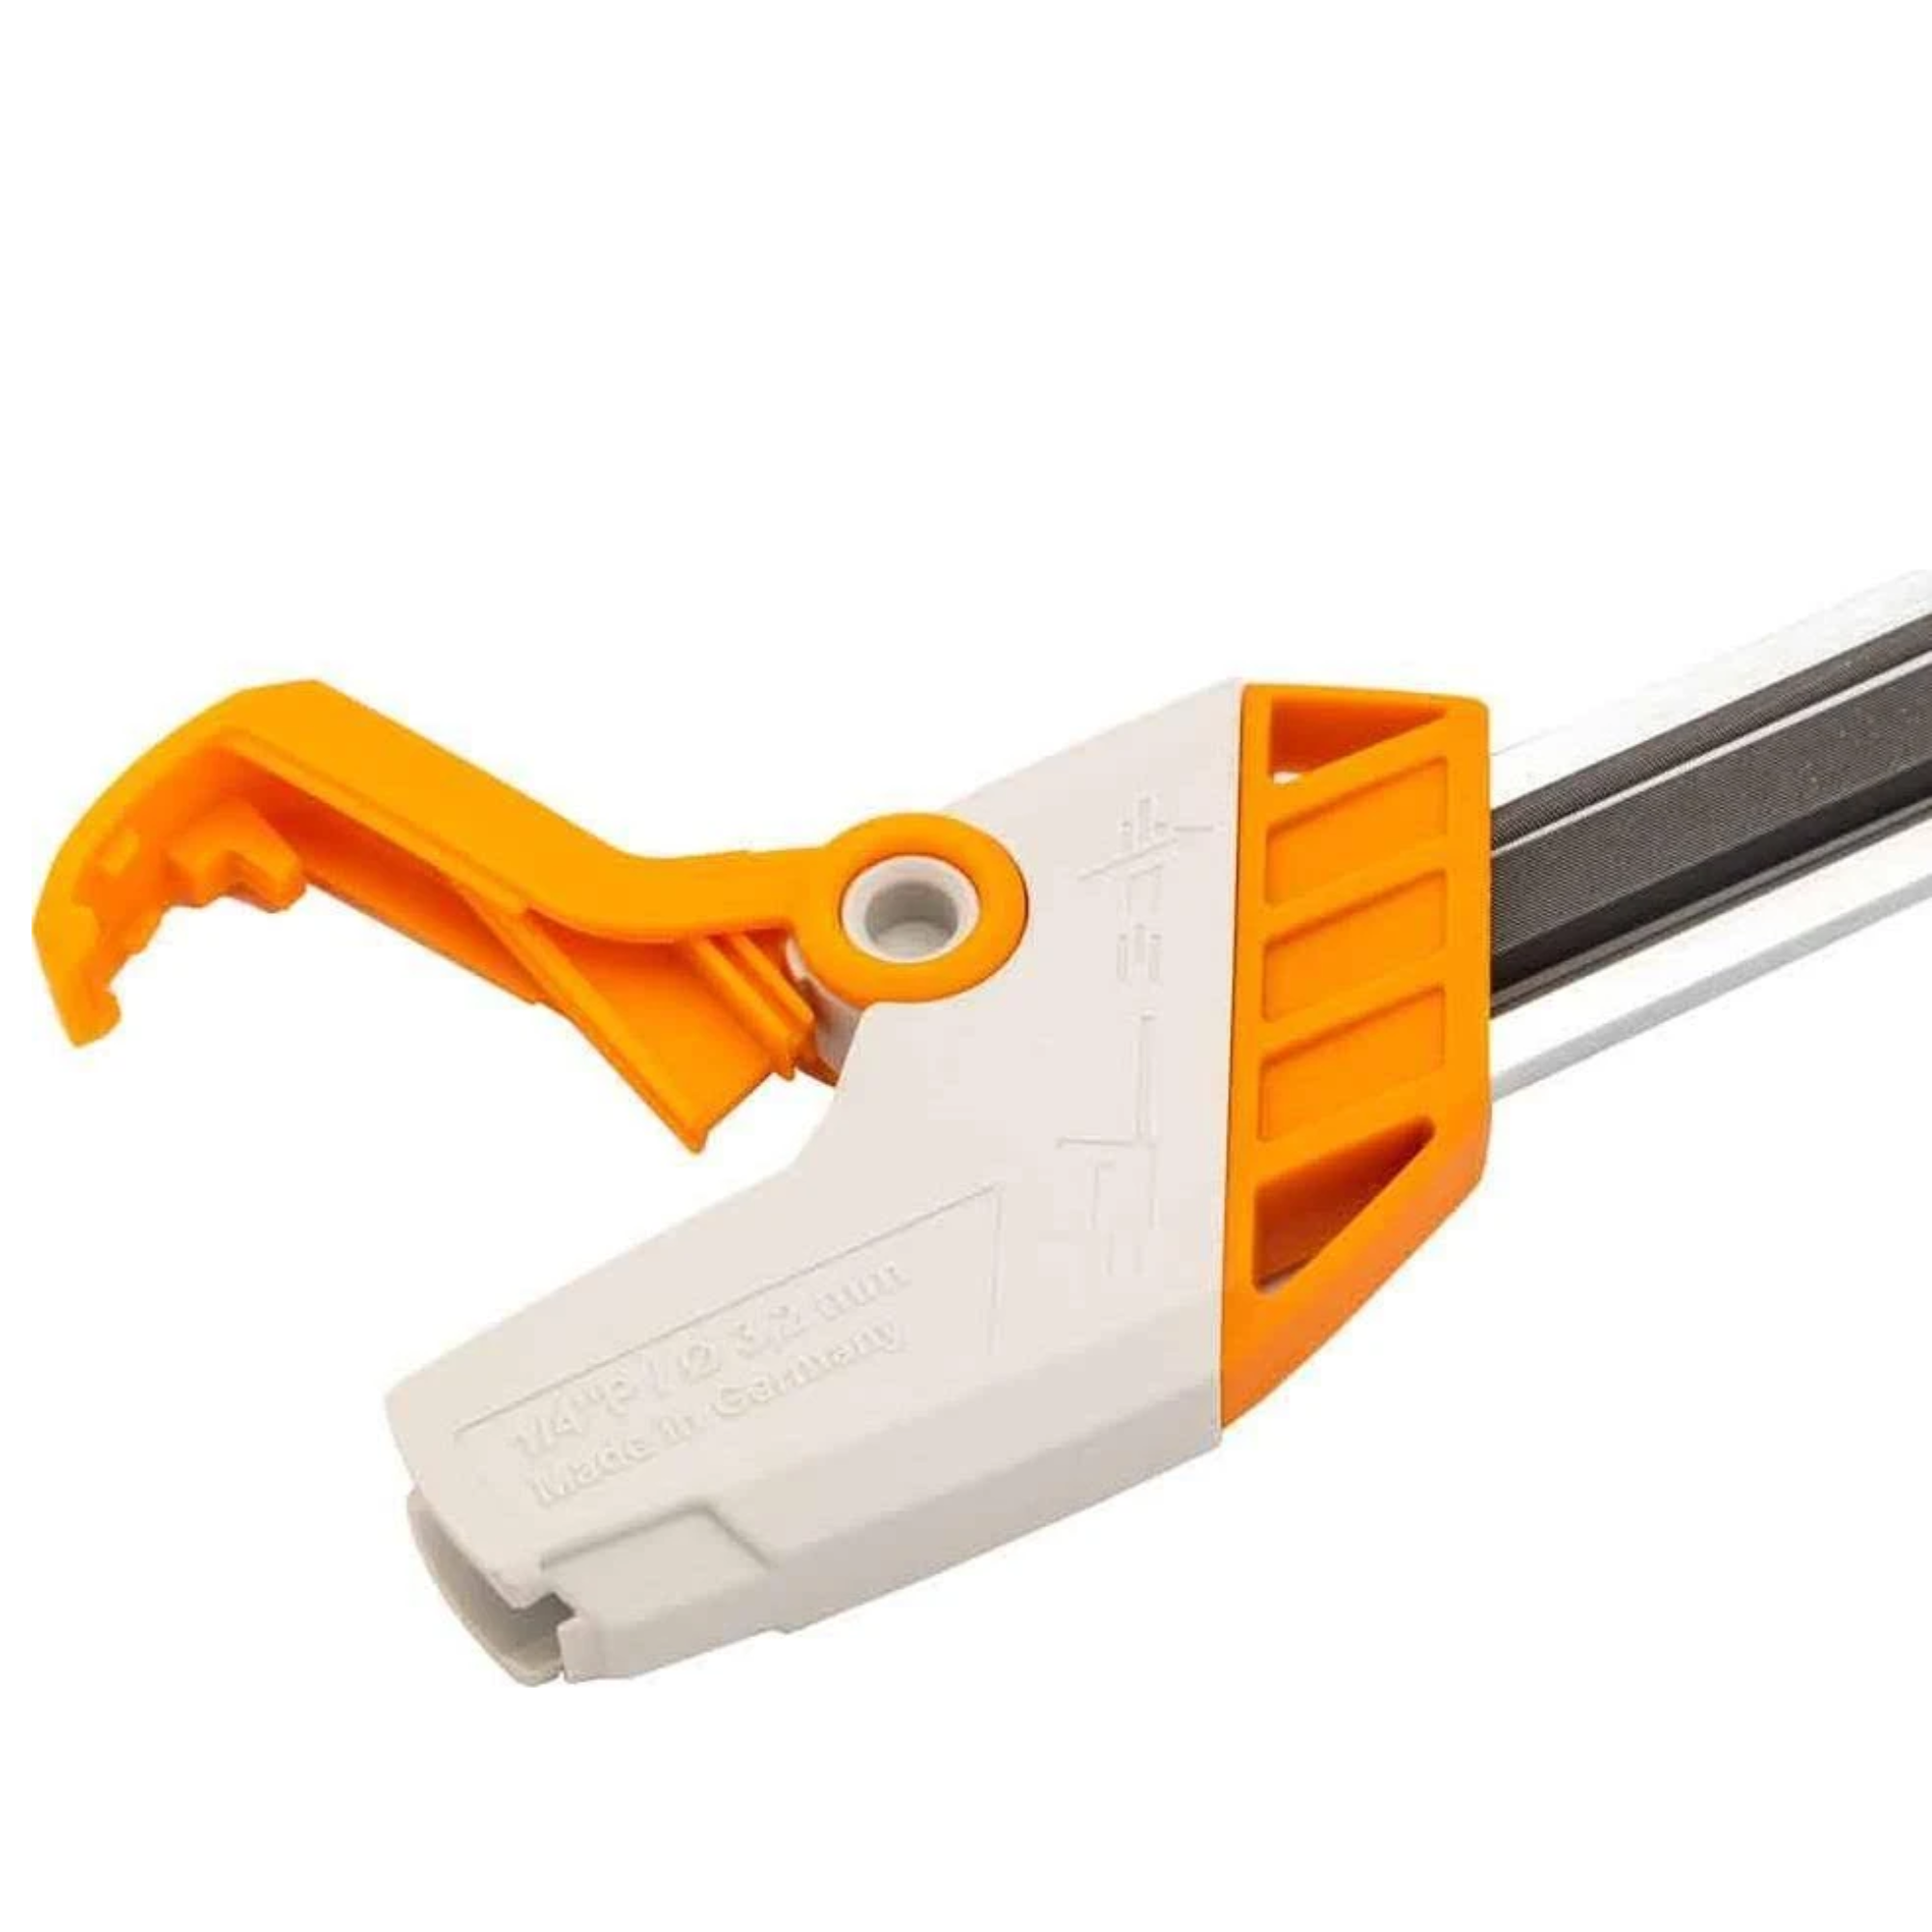 Stihl 2 in 1 Filing Guide & Saw Chain Sharpener 1/4in Picco | 5605 750 4306